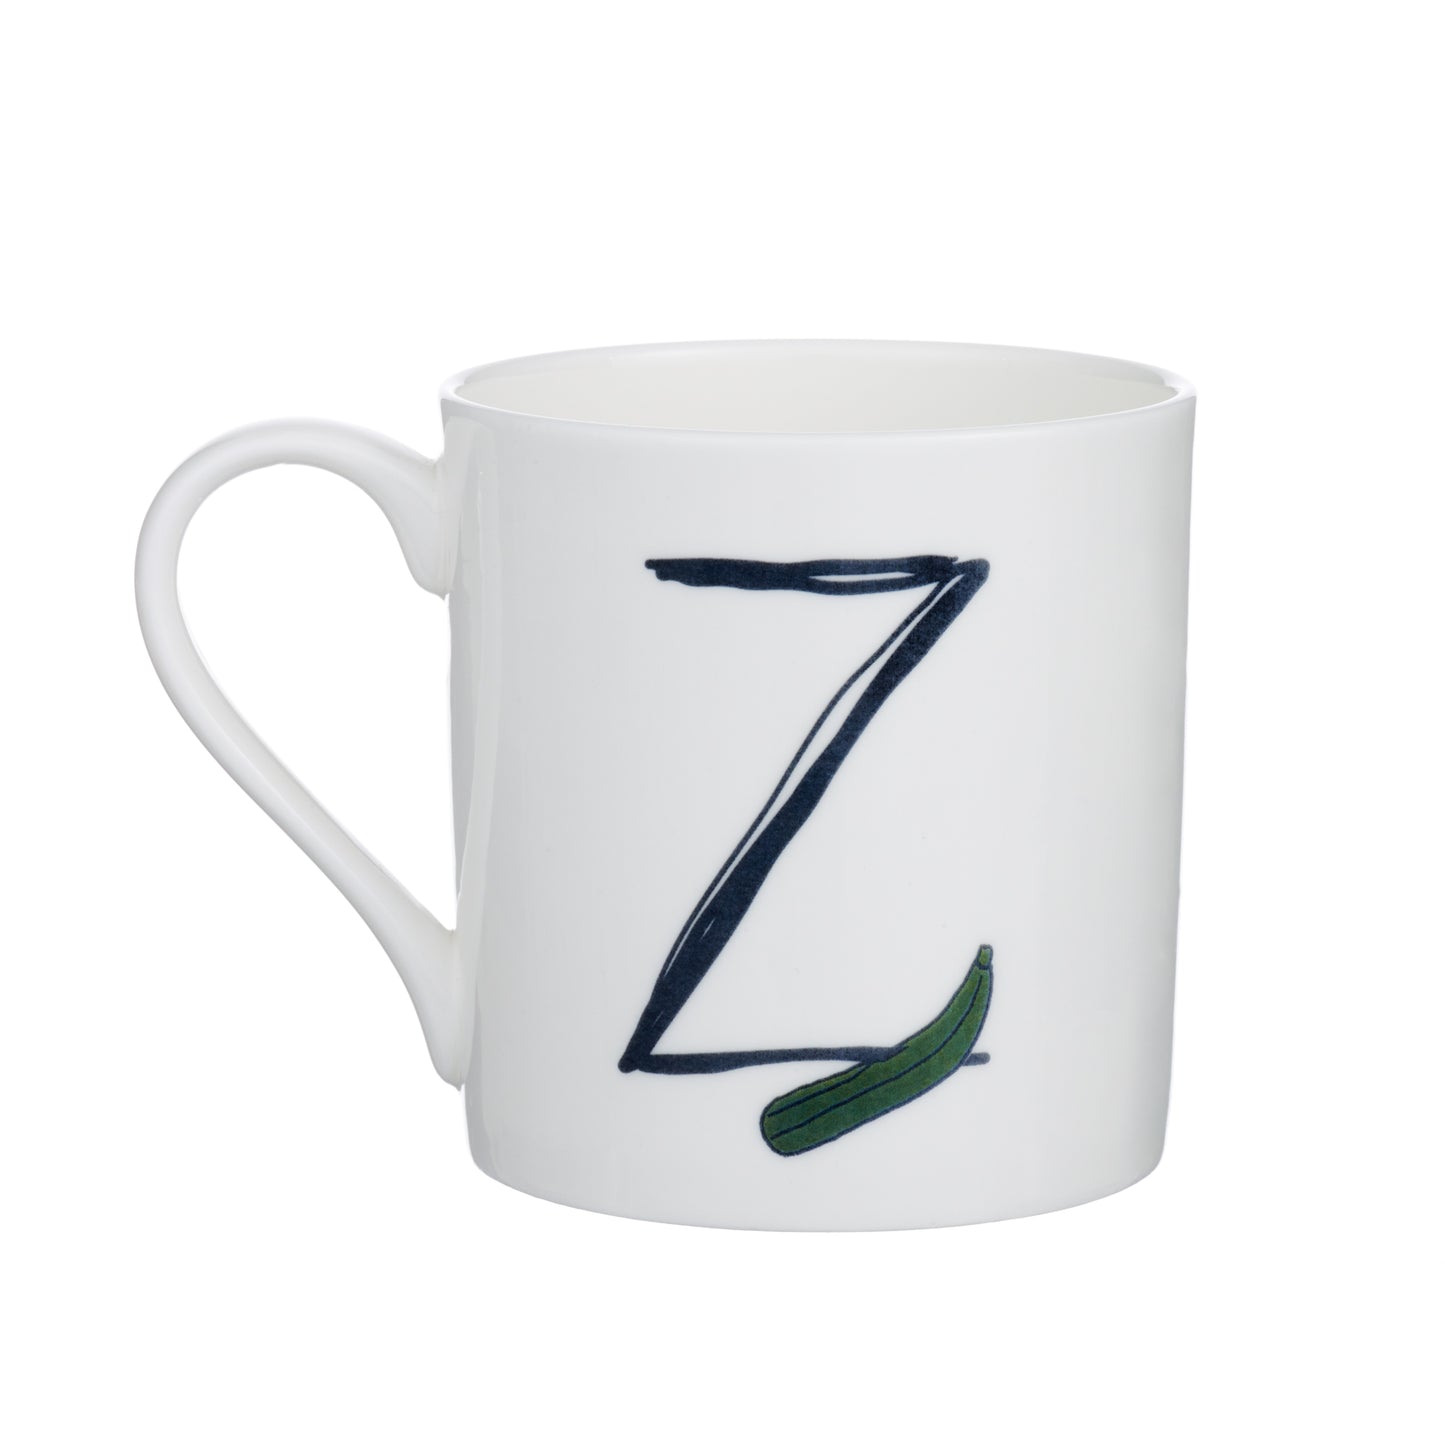 Z - Alphabet of Snacking Animals Mug